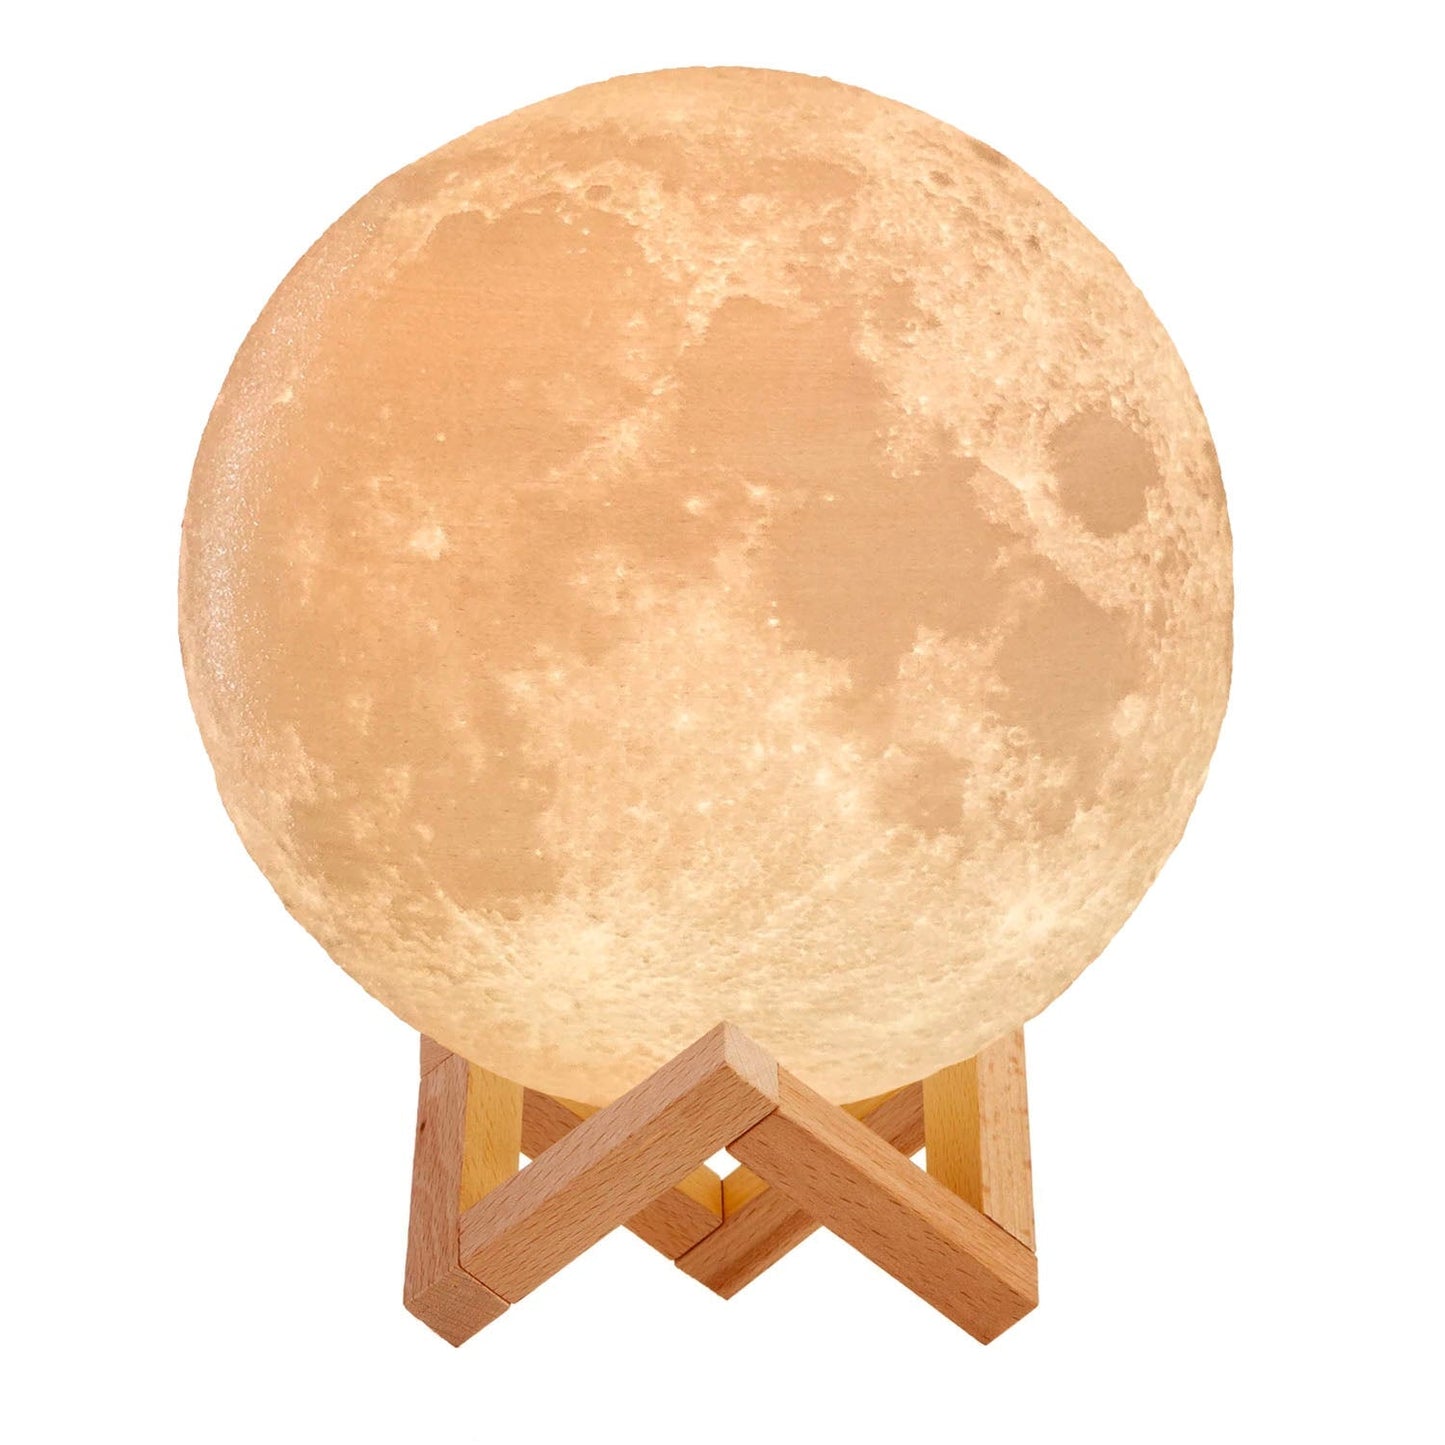 Moon Lamp Decor Latest Aesthetics Mega Moon – 7.9 inch 